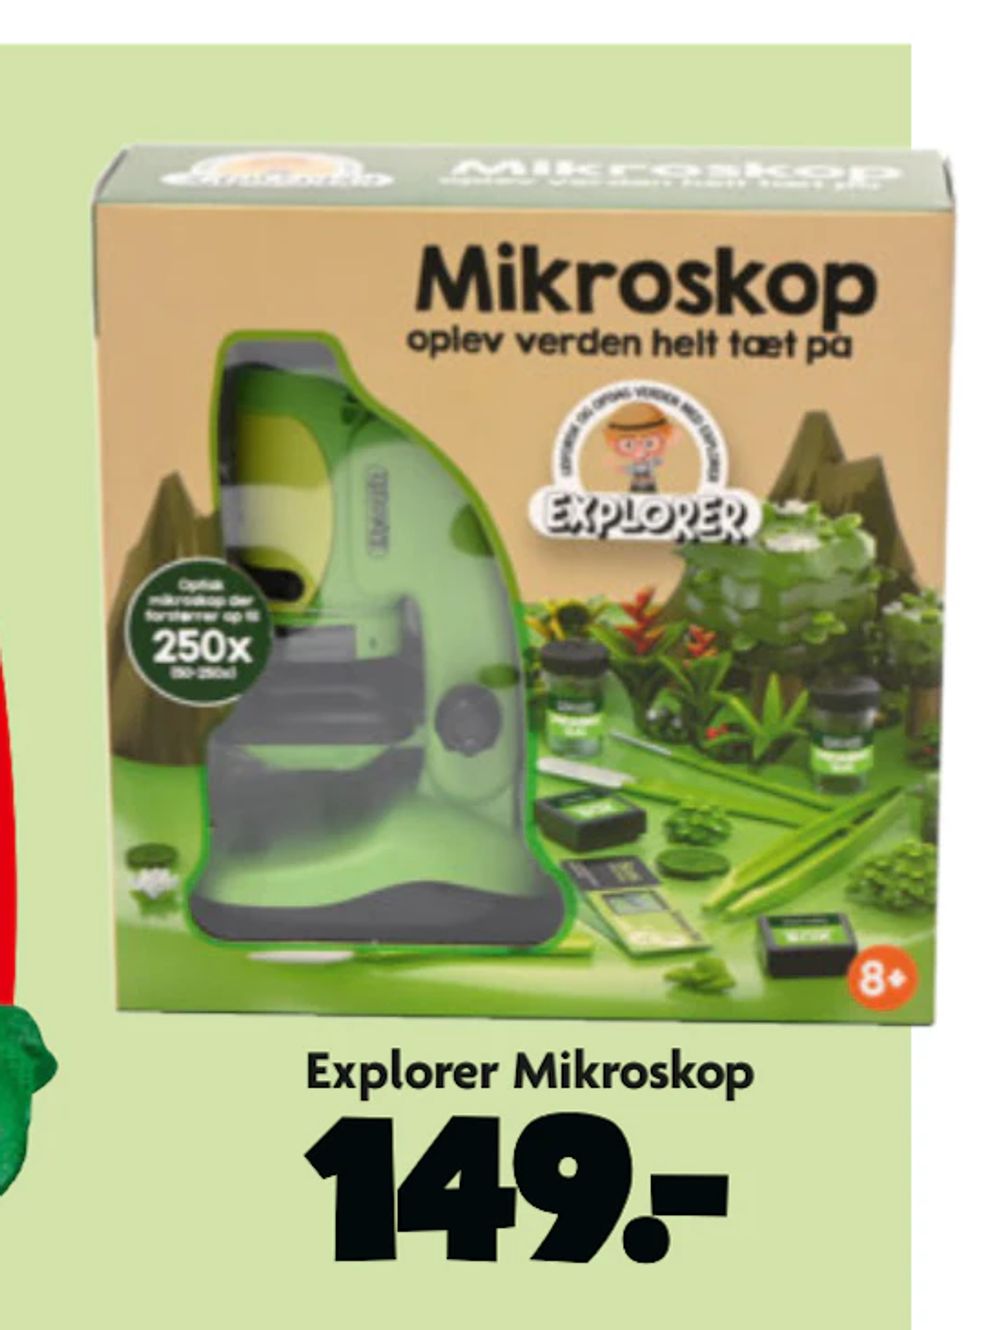 Tilbud på Explorer Mikroskop fra BR til 149 kr.